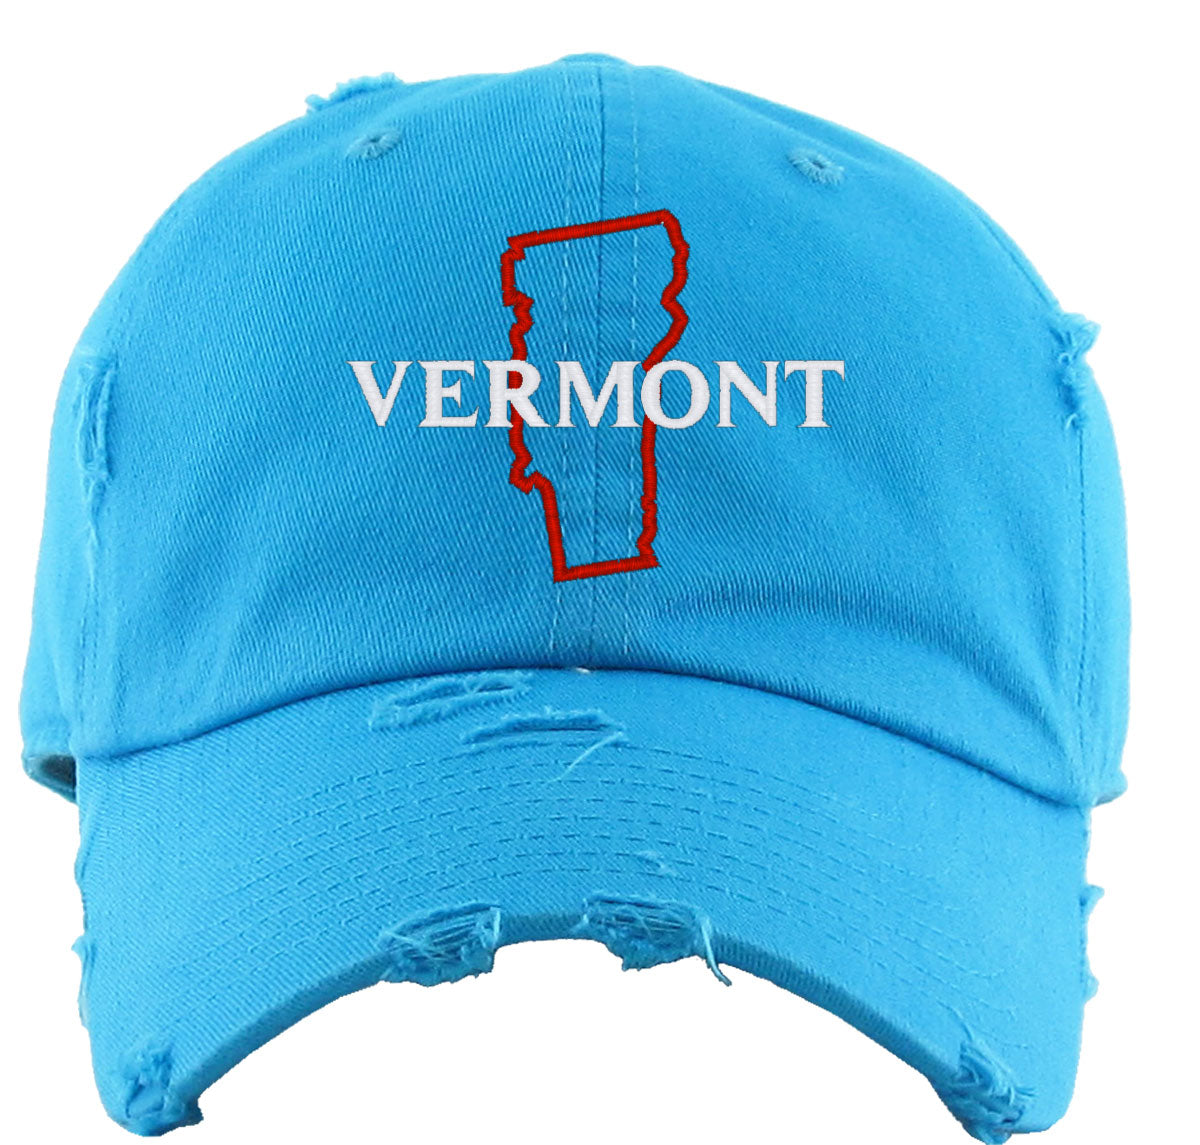 Vermont Vintage Baseball Cap